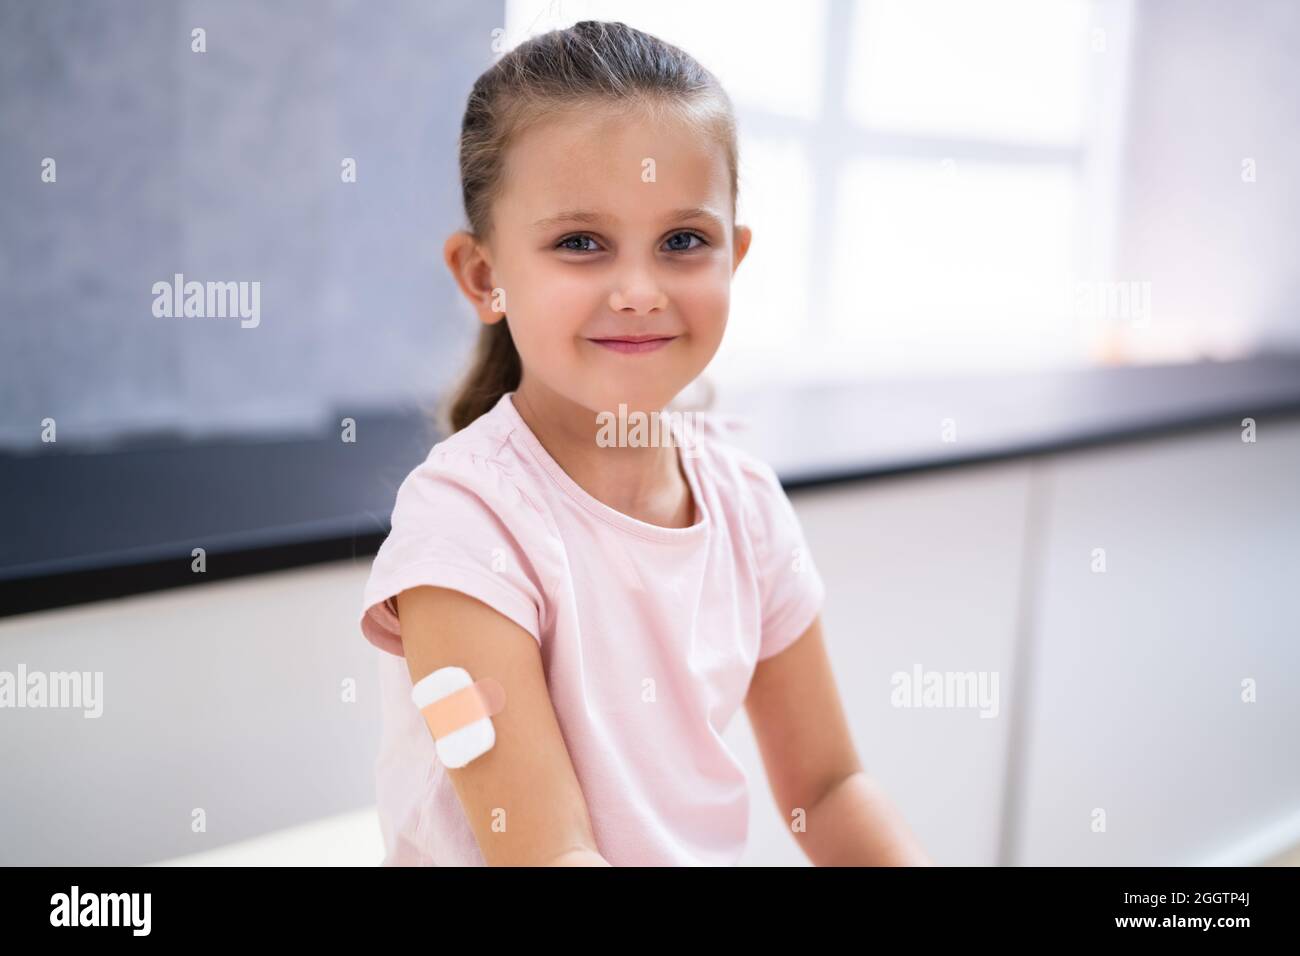 Kid Corona Virus Vaccine Injection. Covid-19 Child Immunization Stock Photo